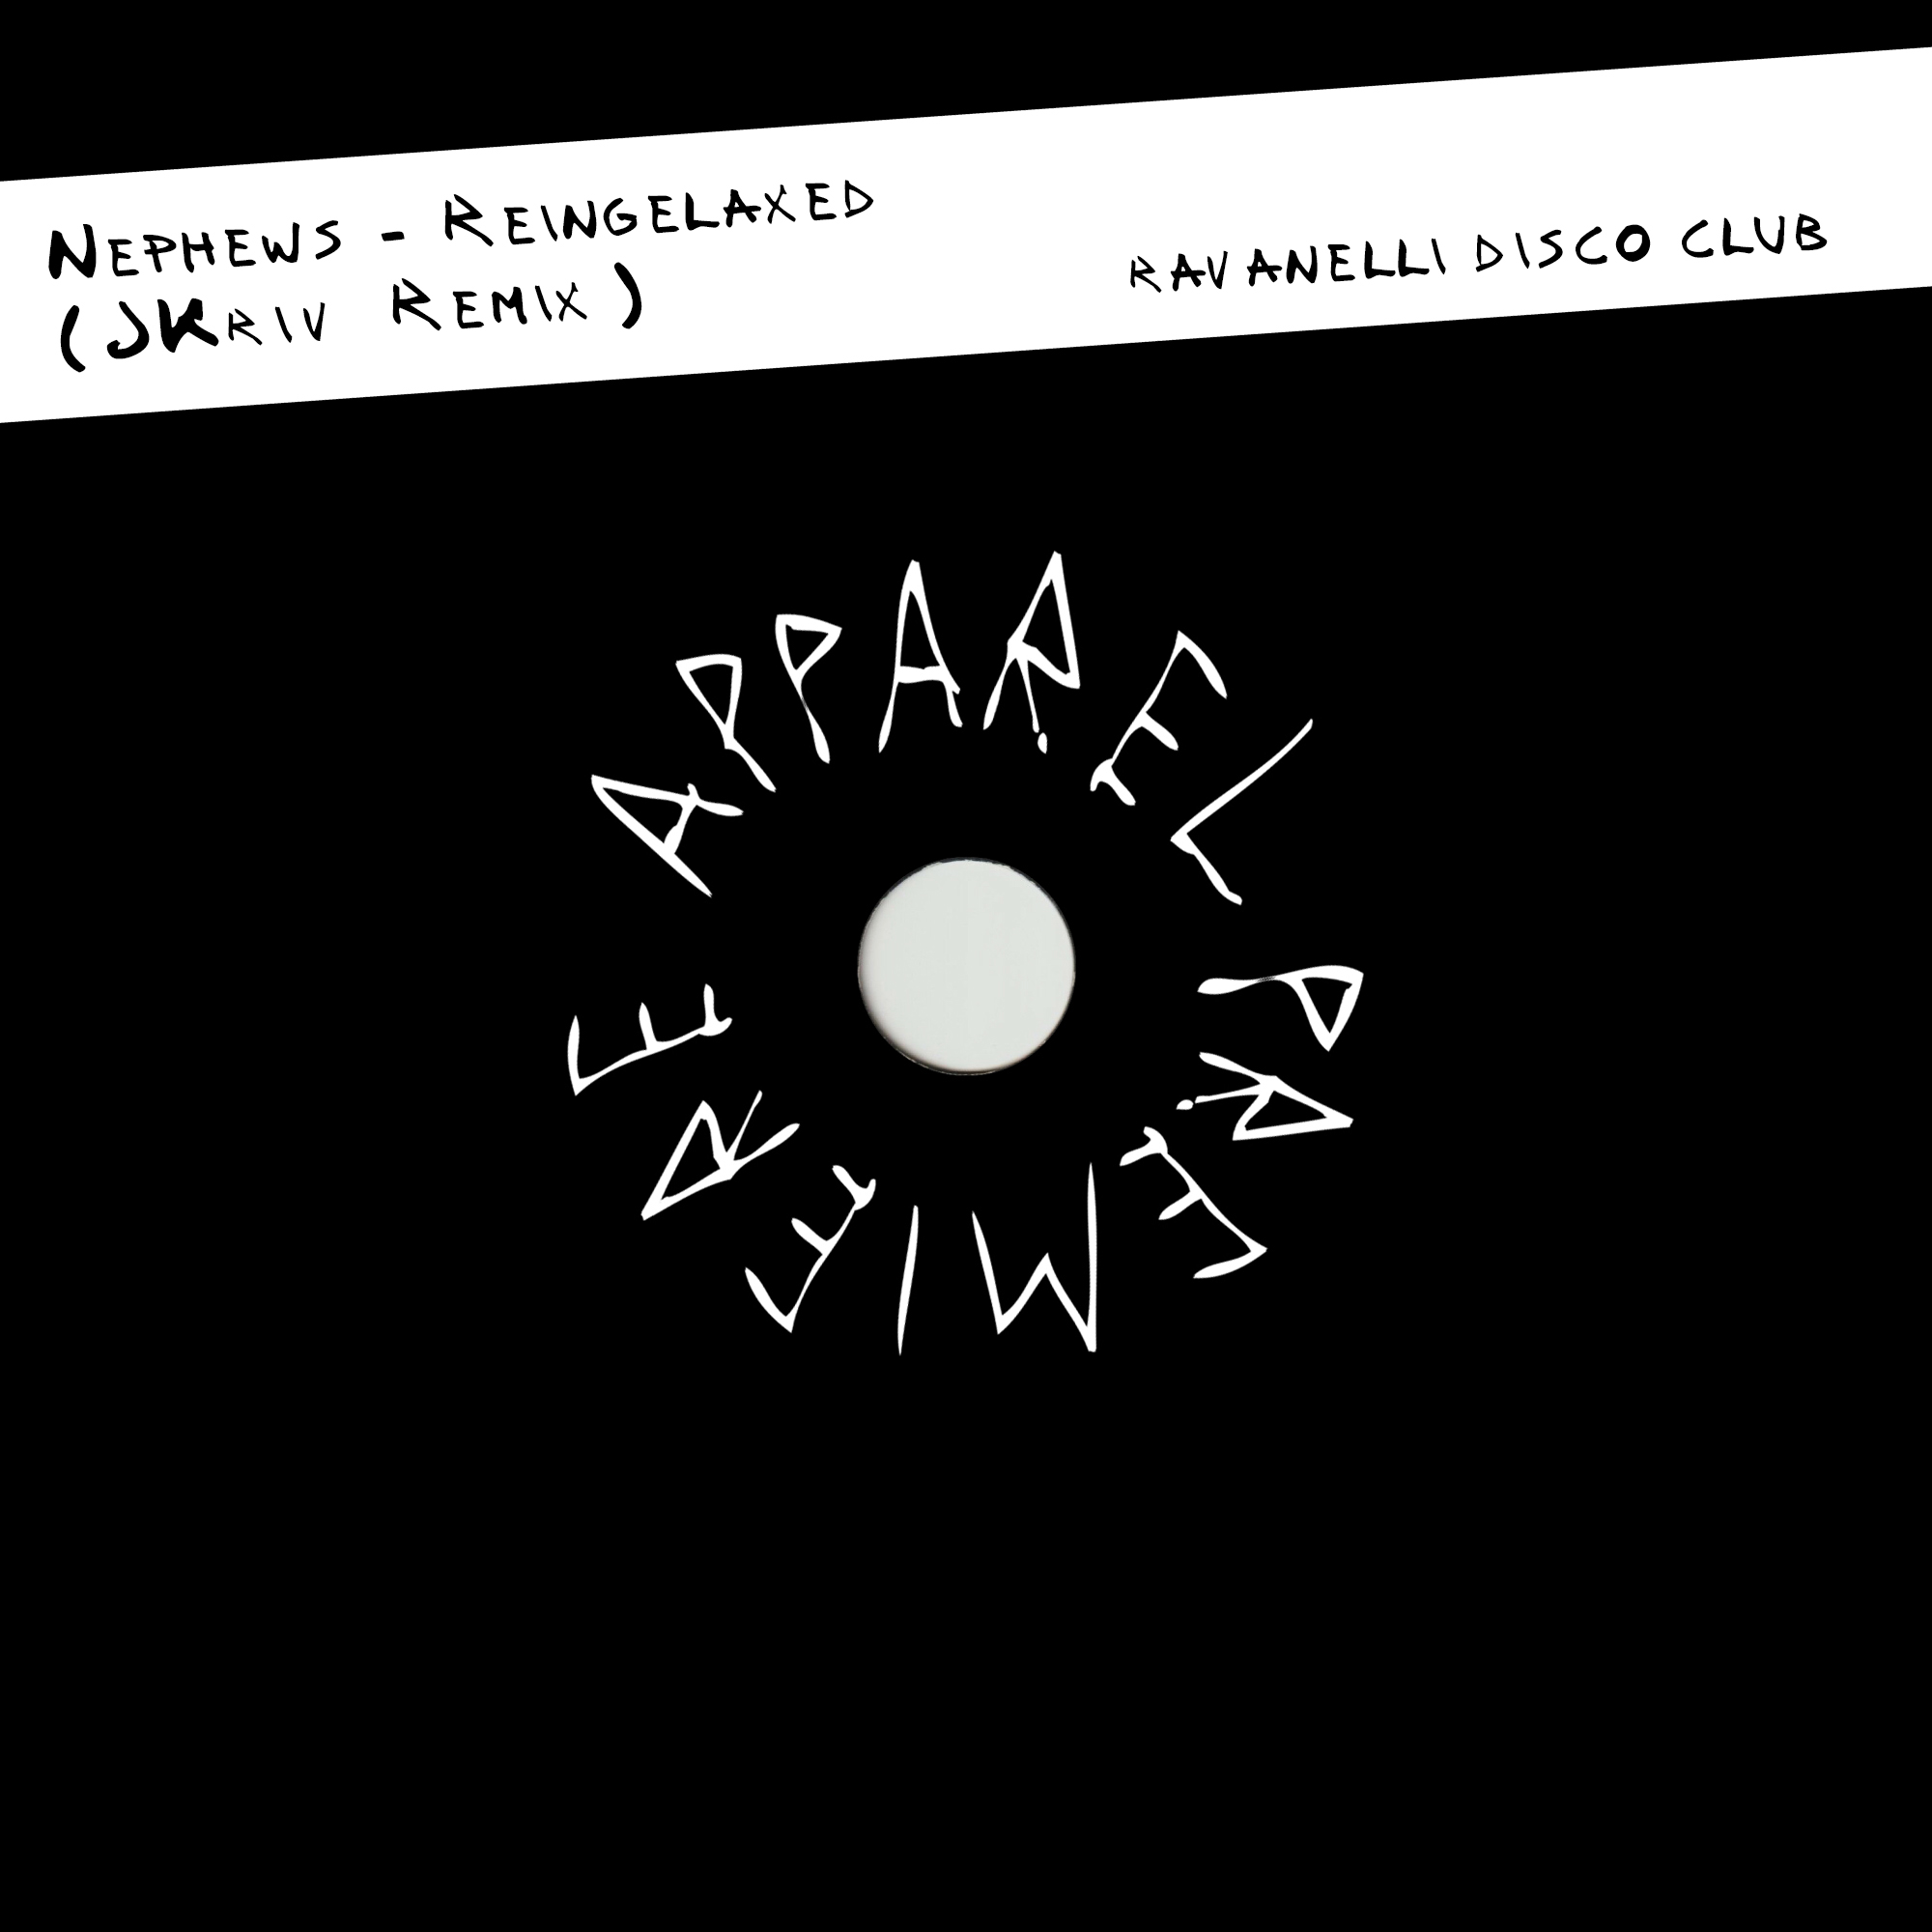 APPAREL PREMIERE Nephews – Reingelaxed (JKriv Remix) [Ravanelli Disco Club]